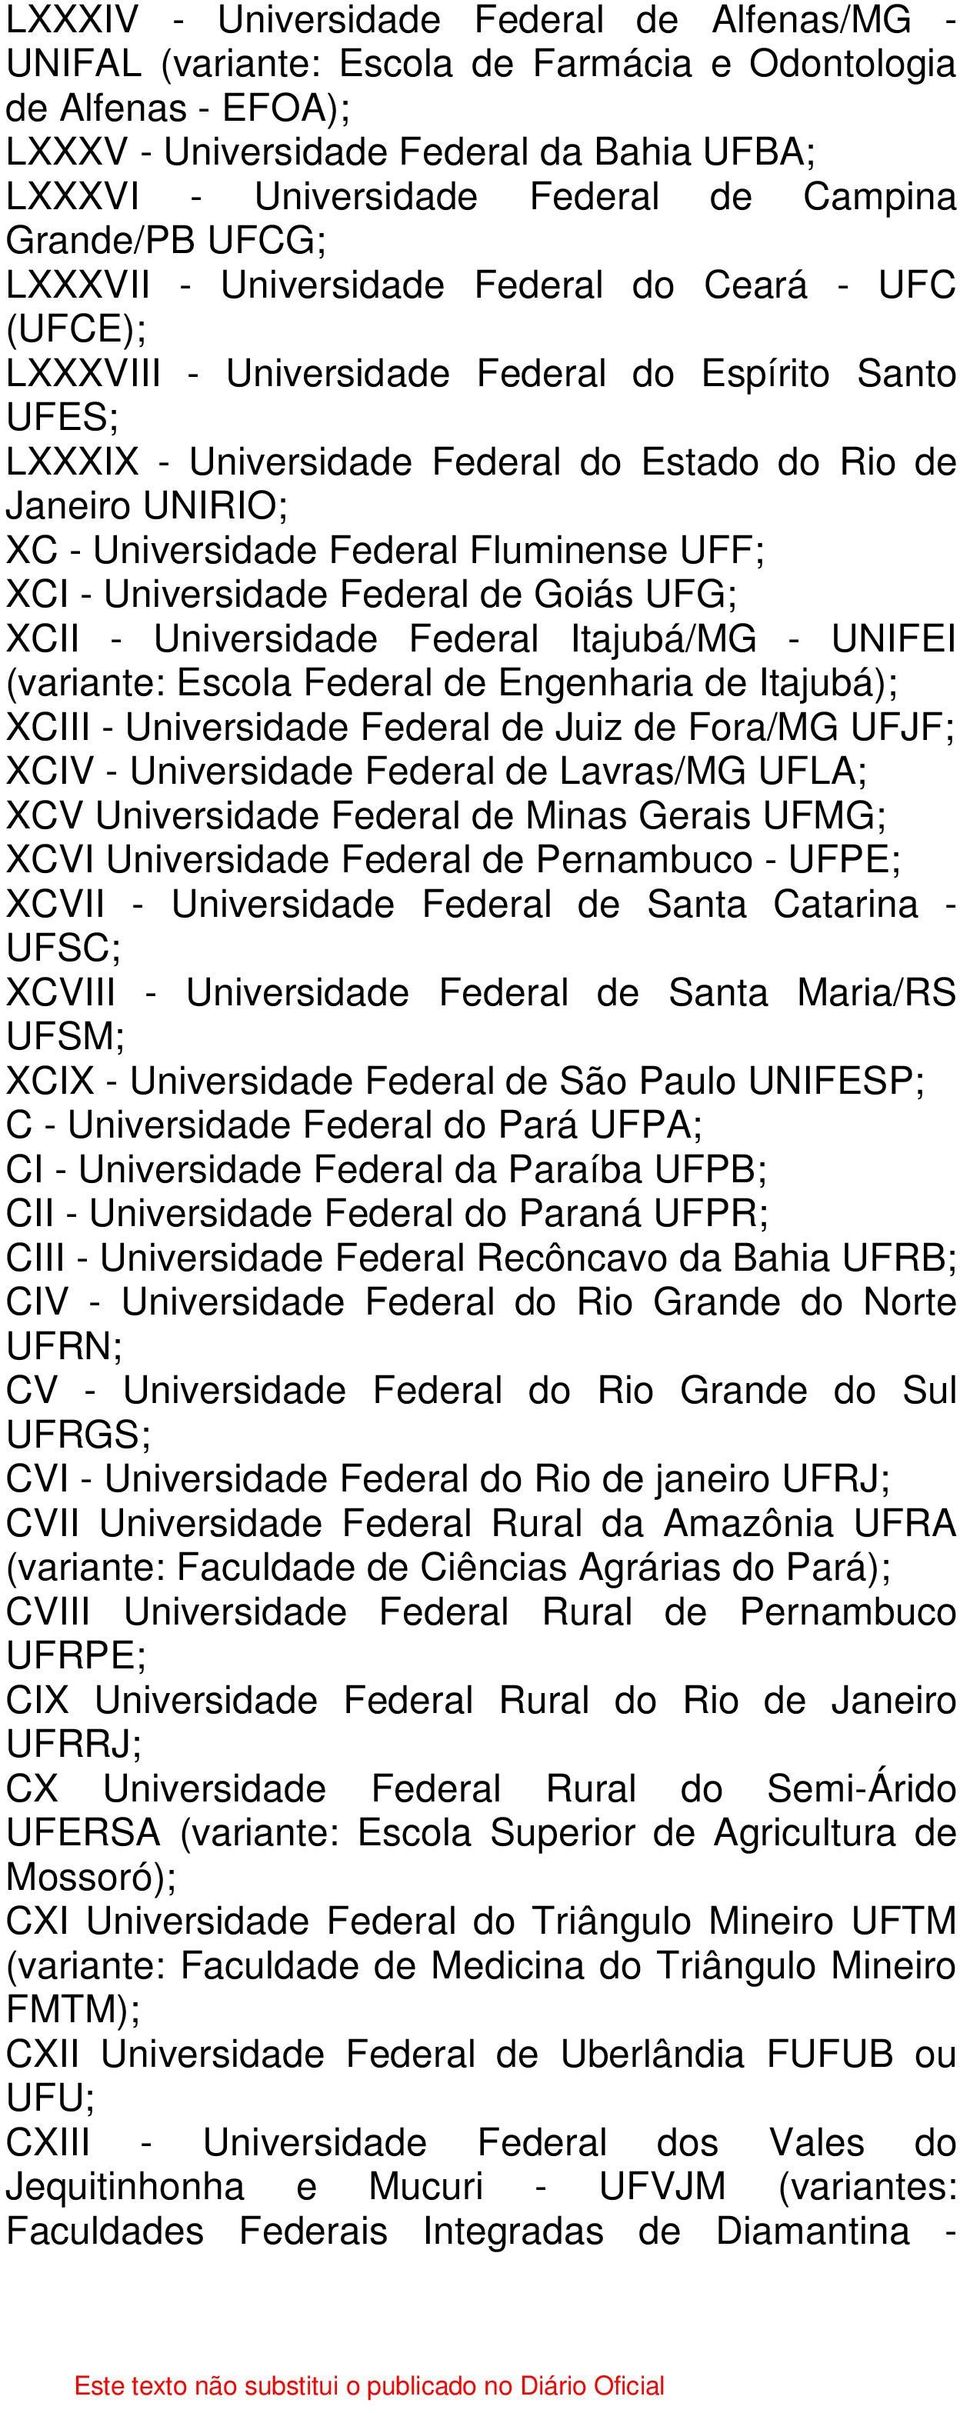 XC - Universidade Federal Fluminense UFF; XCI - Universidade Federal de Goiás UFG; XCII - Universidade Federal Itajubá/MG - UNIFEI (variante: Escola Federal de Engenharia de Itajubá); XCIII -